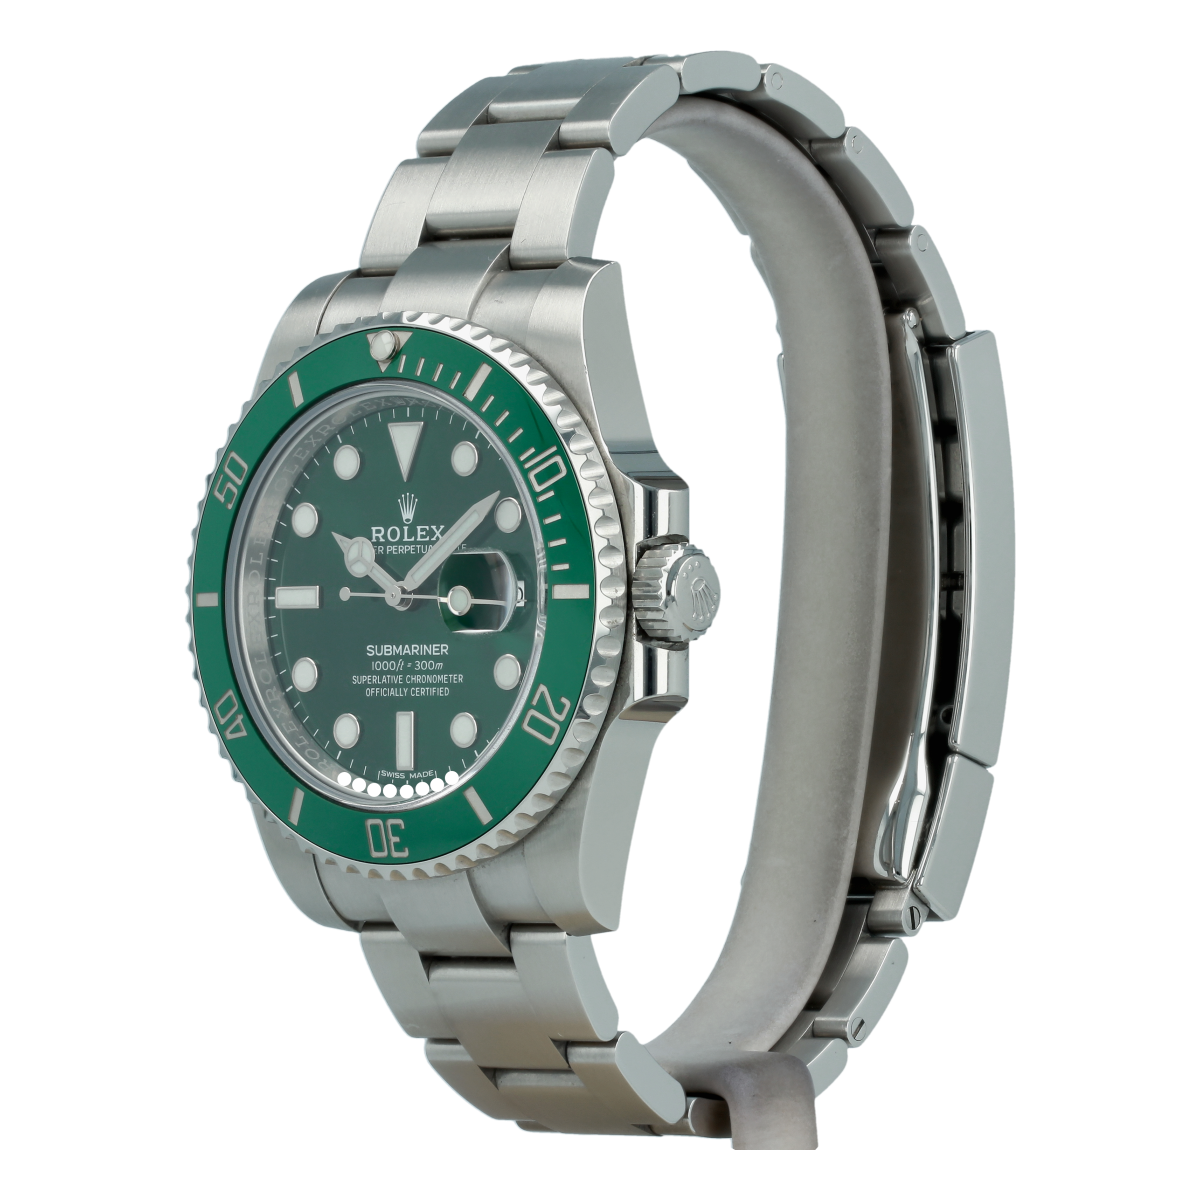 Rolex Submariner Date Hulk 116610LV 2019 Edition